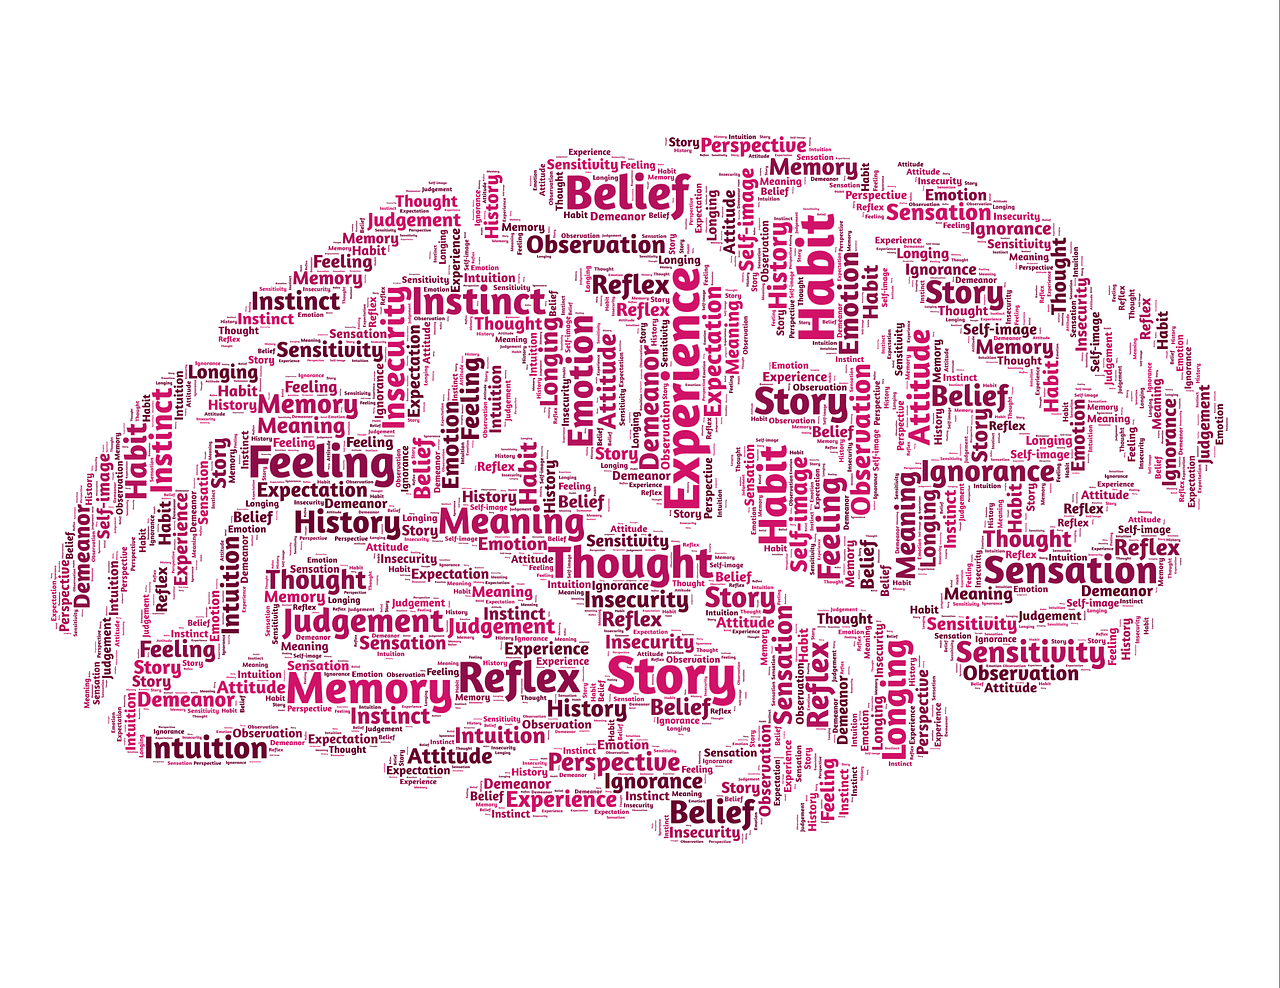 Psychology,brain,mind,mindset,reality - free image from needpix.com